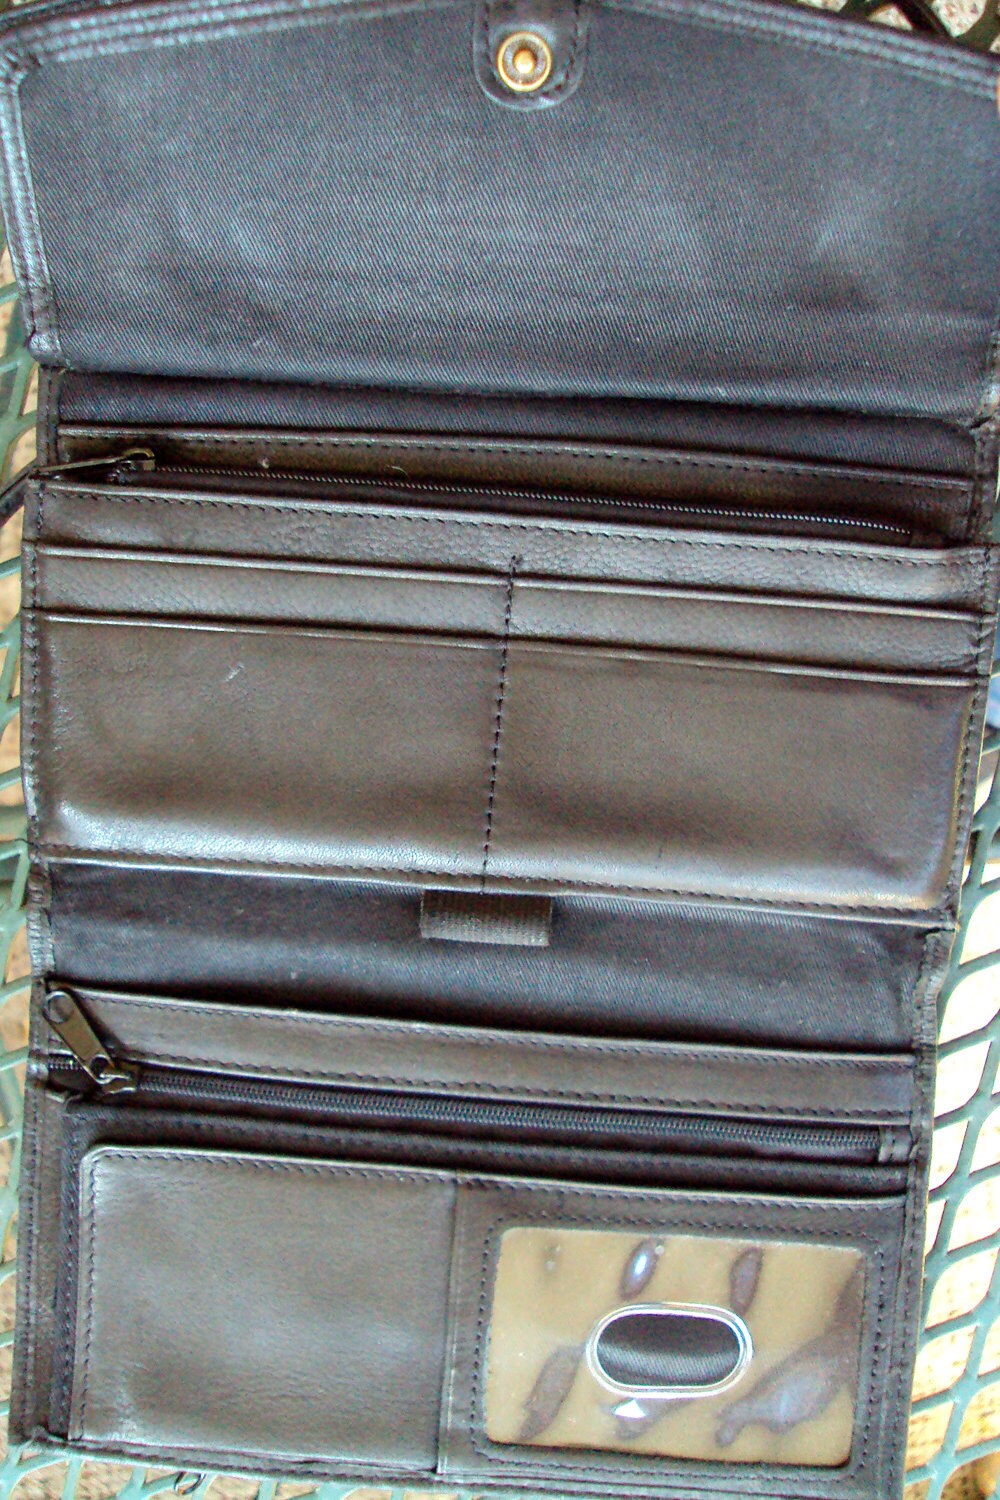 crossbody wallet bag Fossil black leather purse